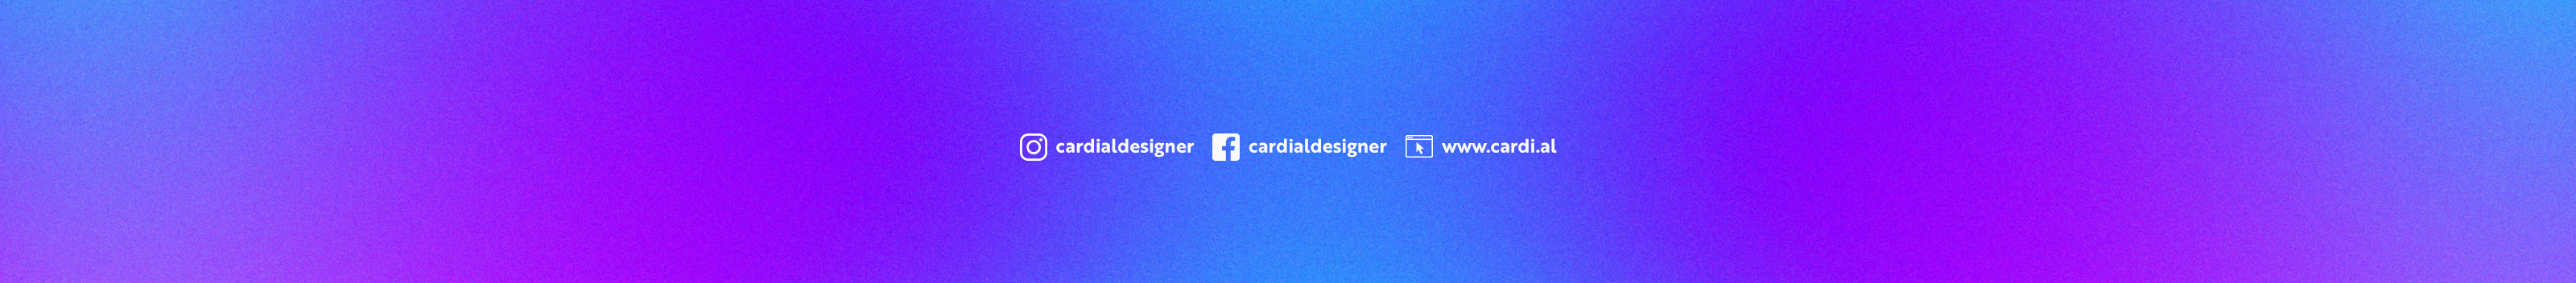 Gabriel Cardial's profile banner